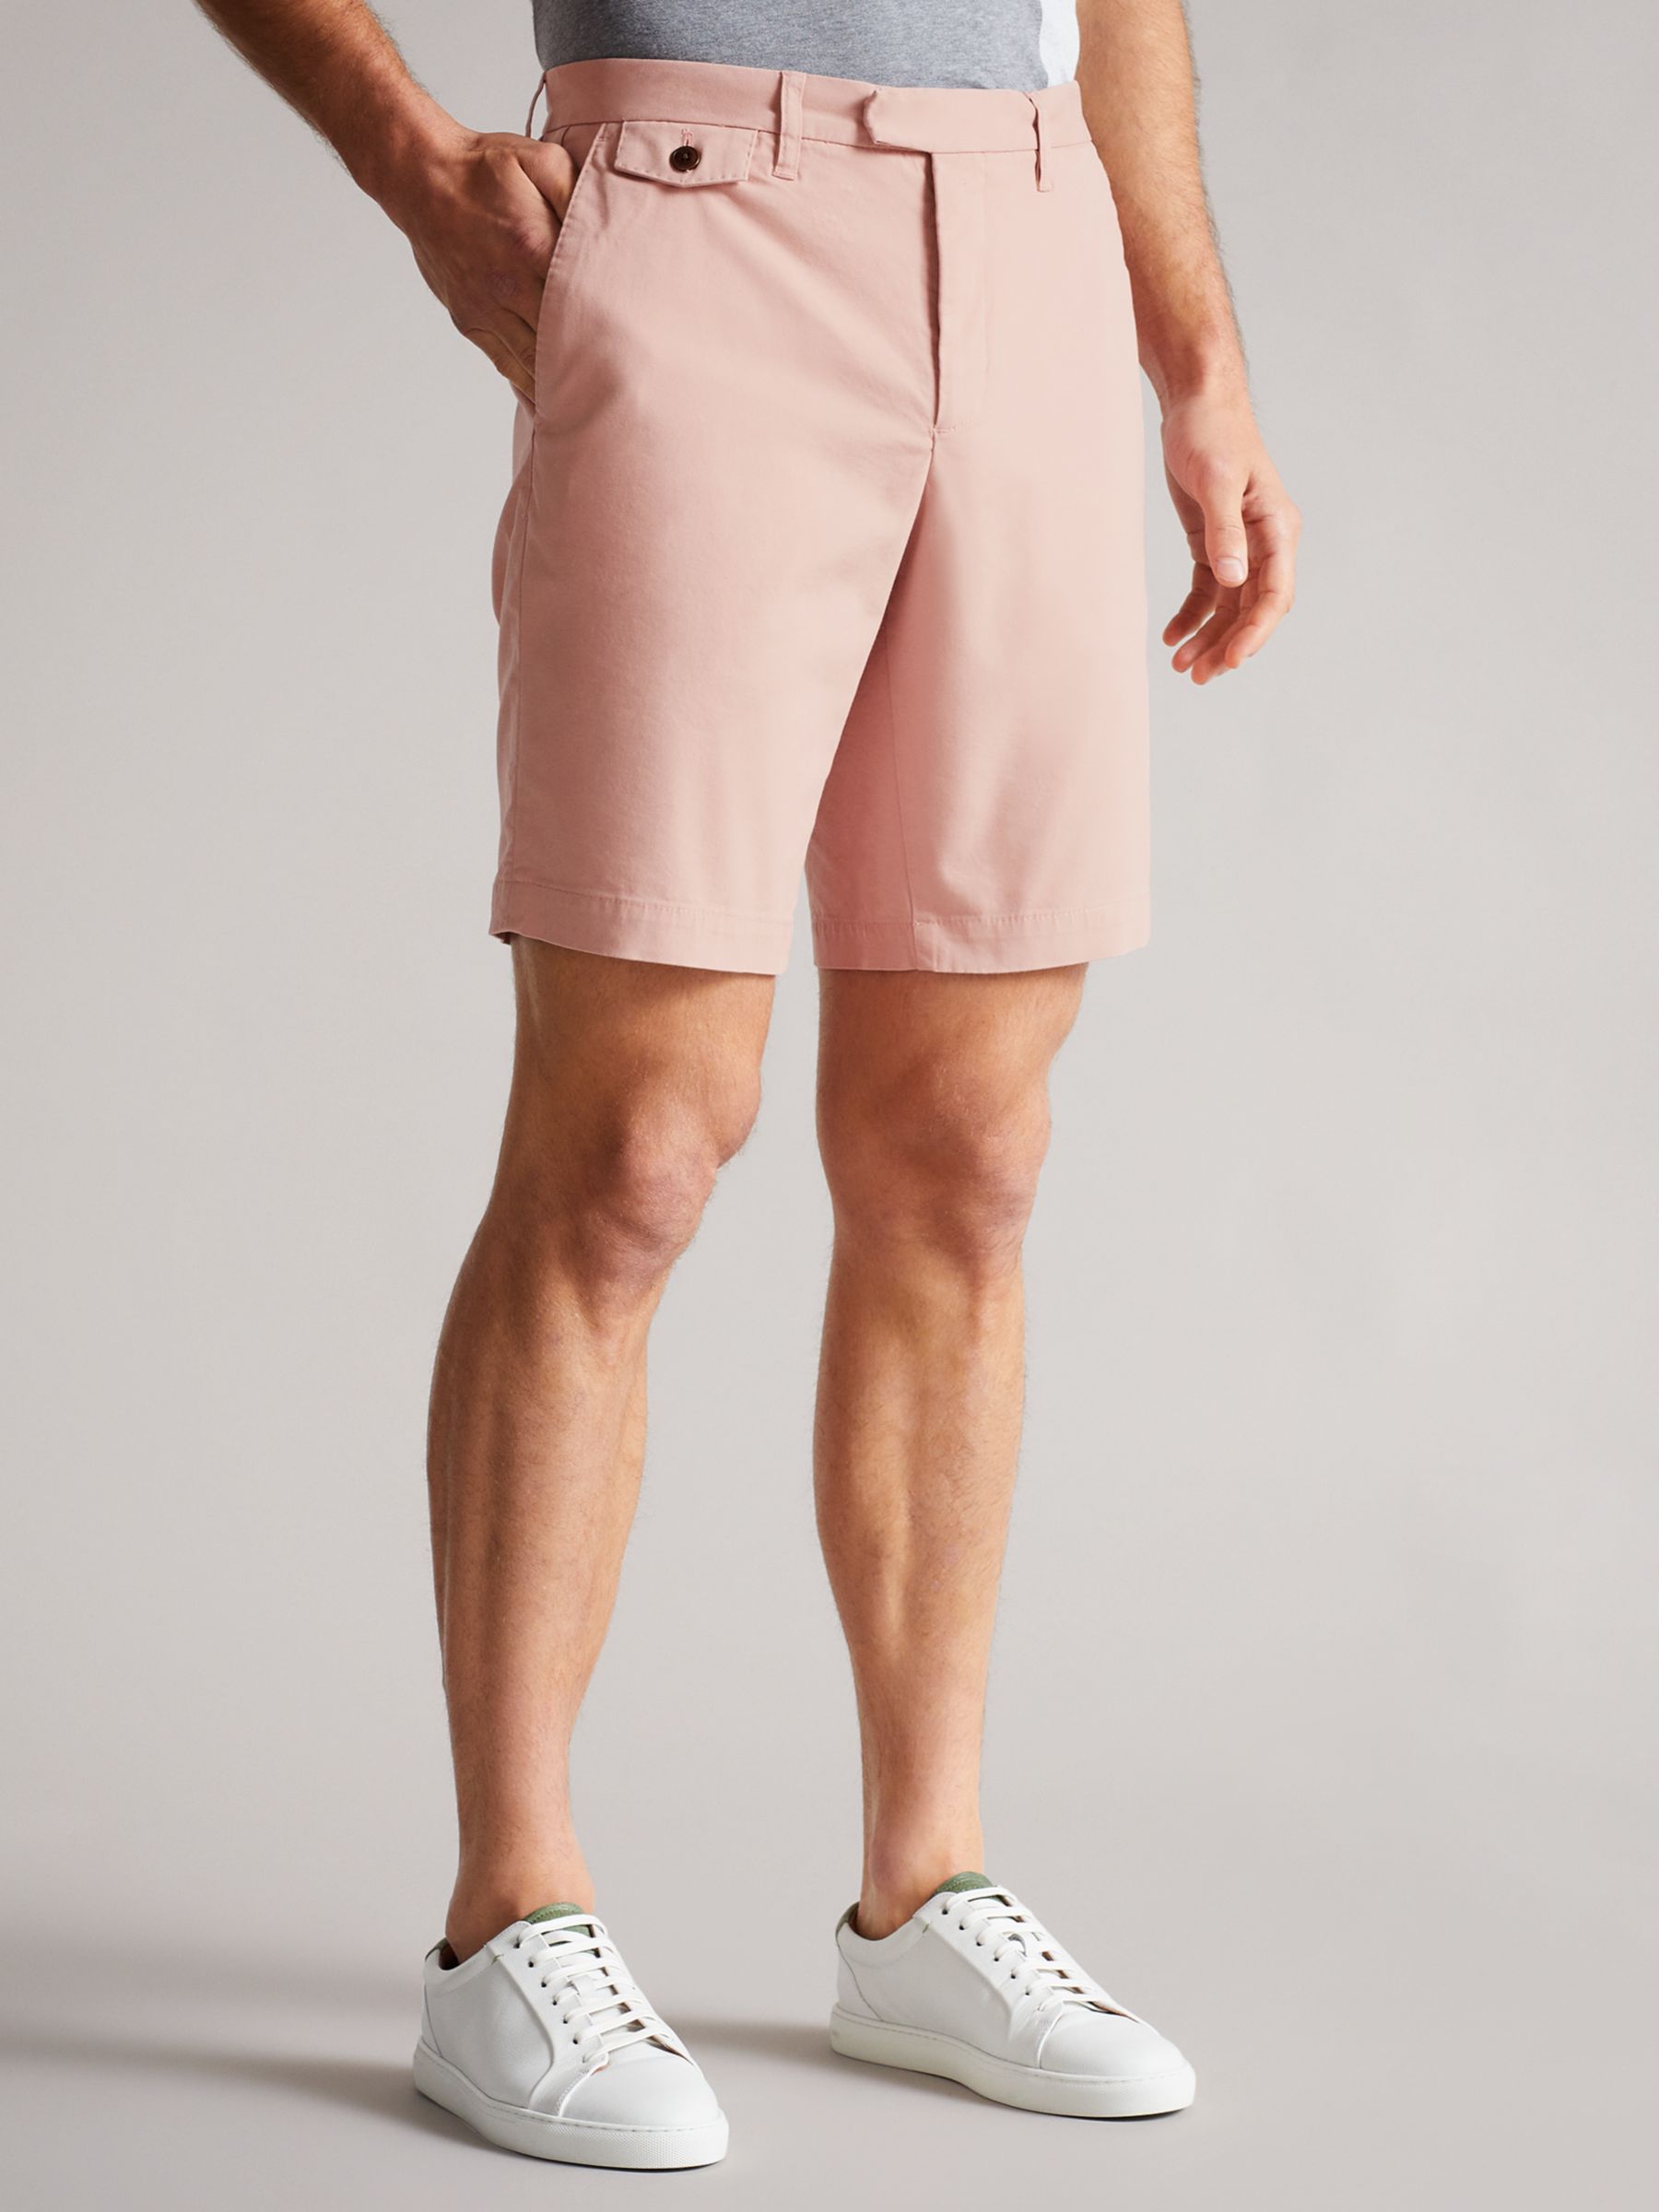 Ted Baker Ashfrd Chino Shorts, Pink, 28R